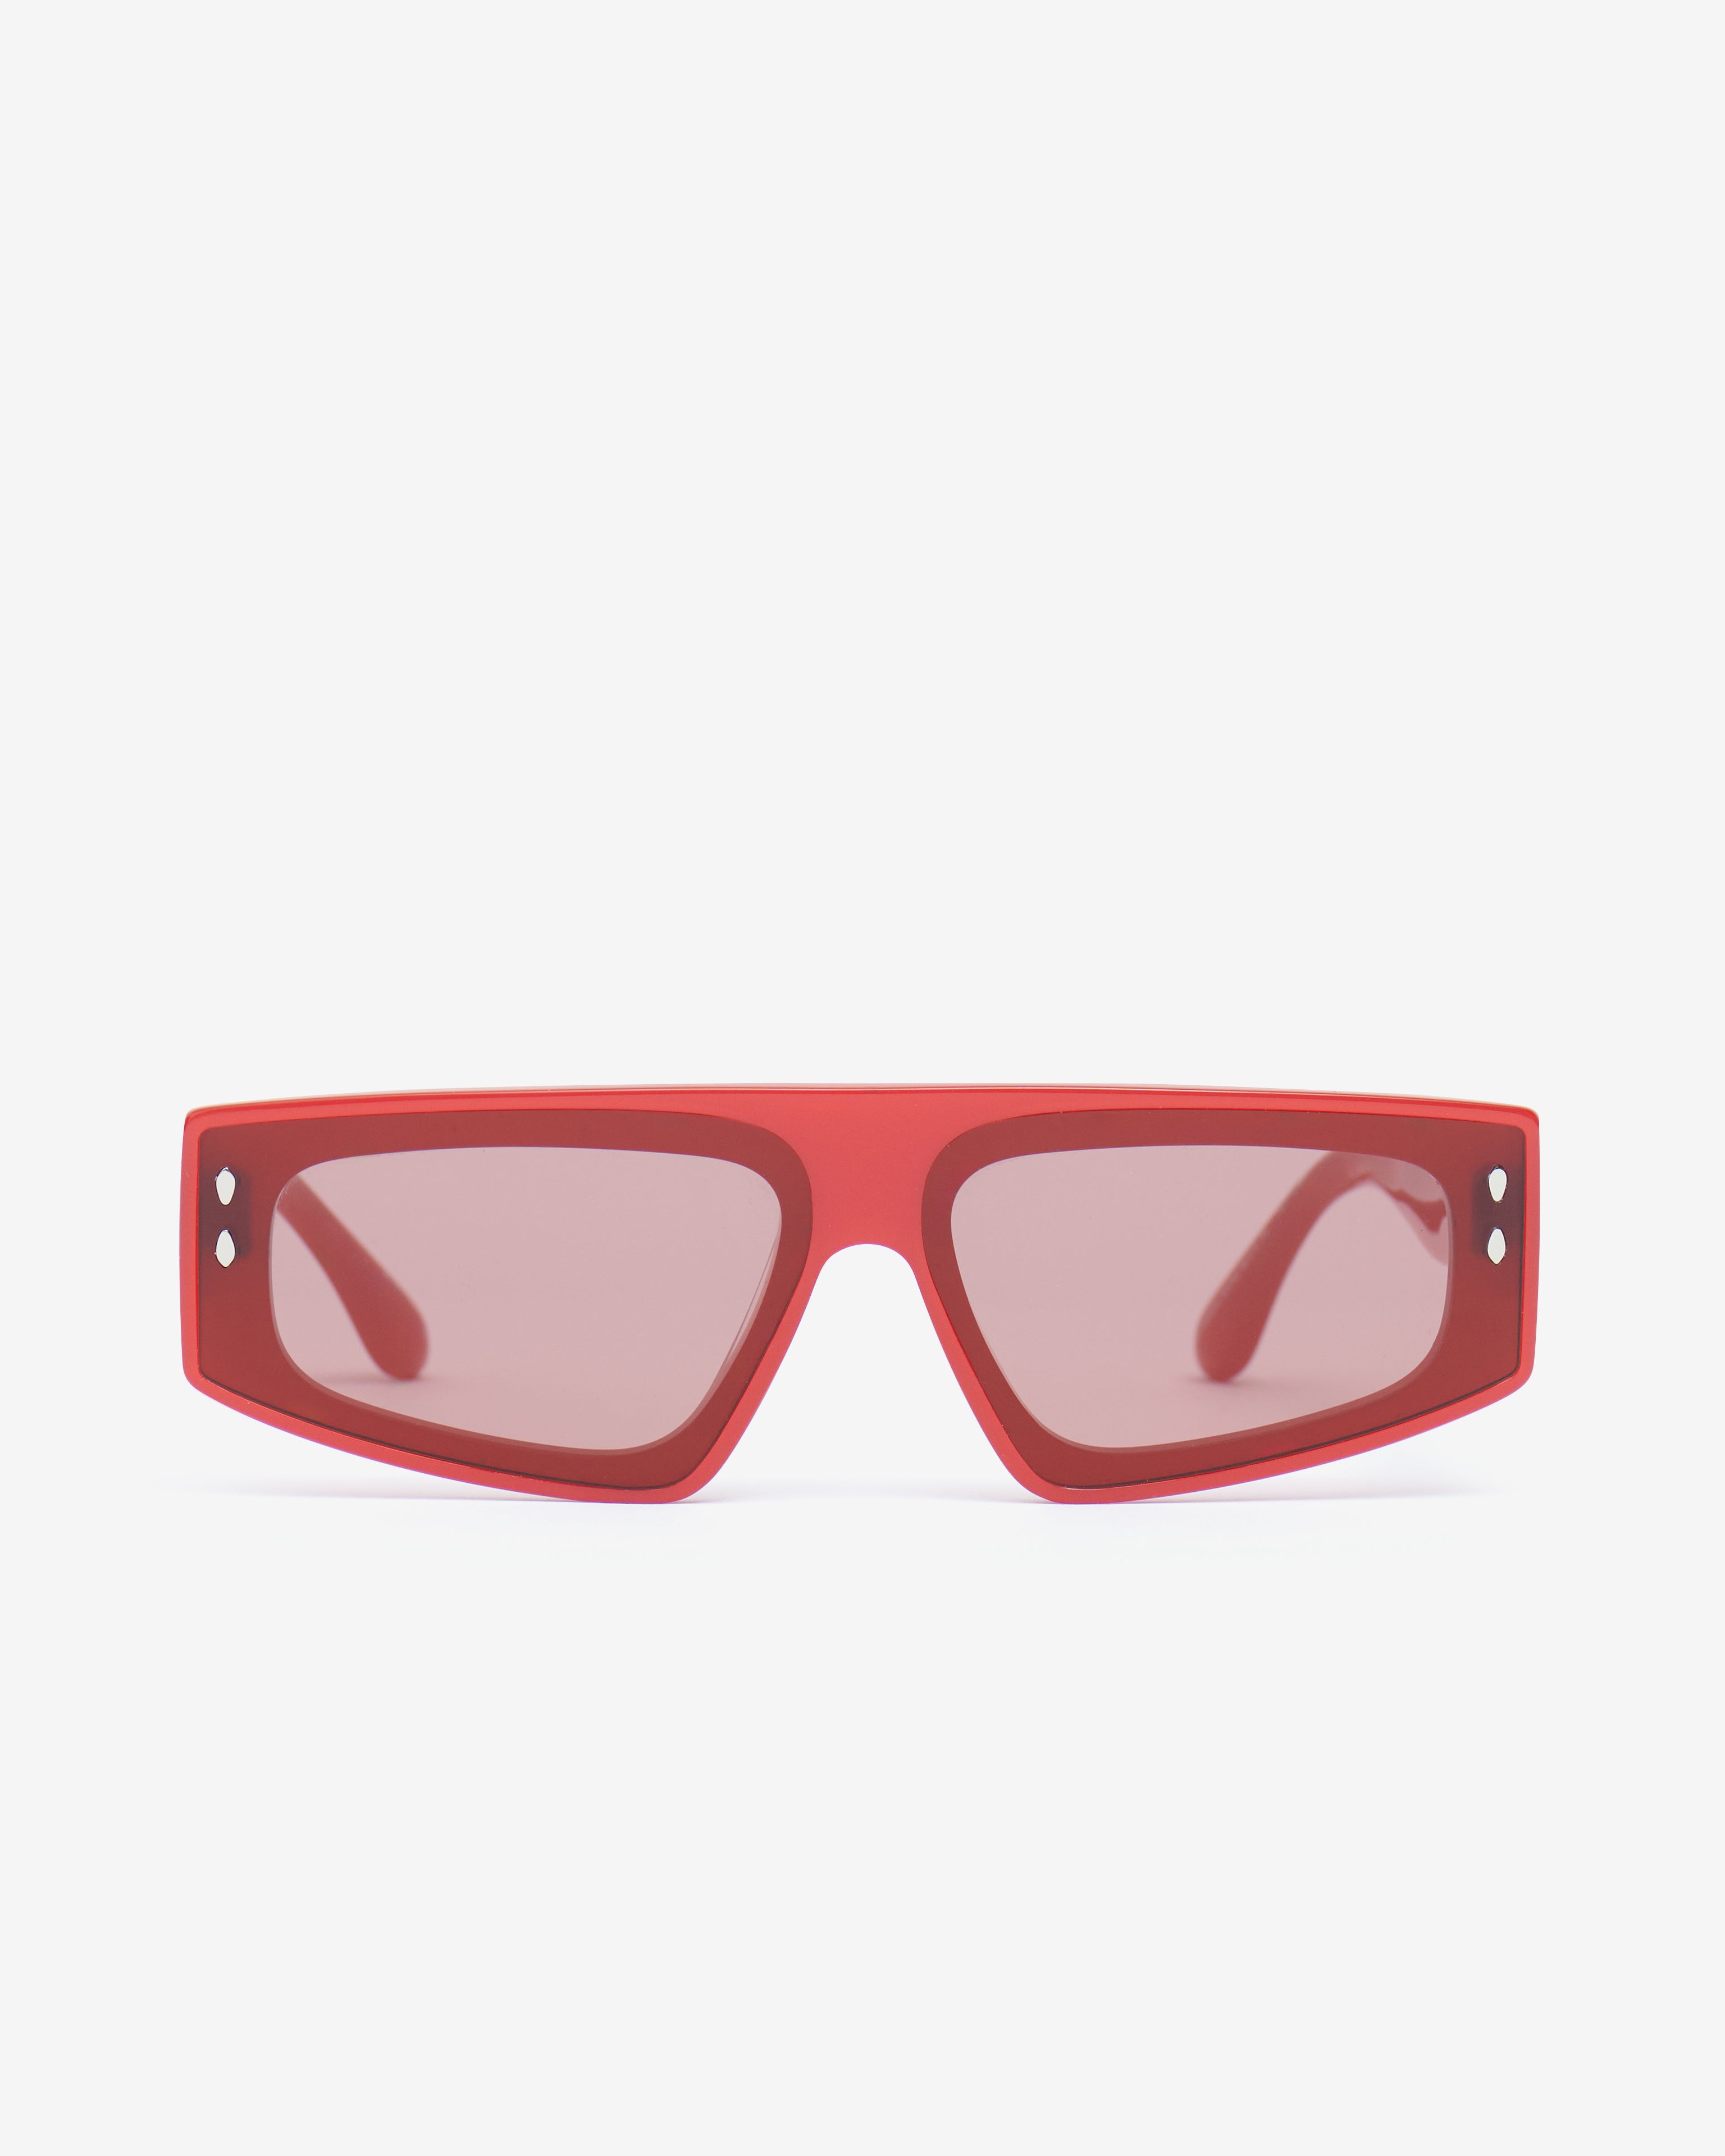 Zoomy sunglasses Woman Pearled red-burgundy 1